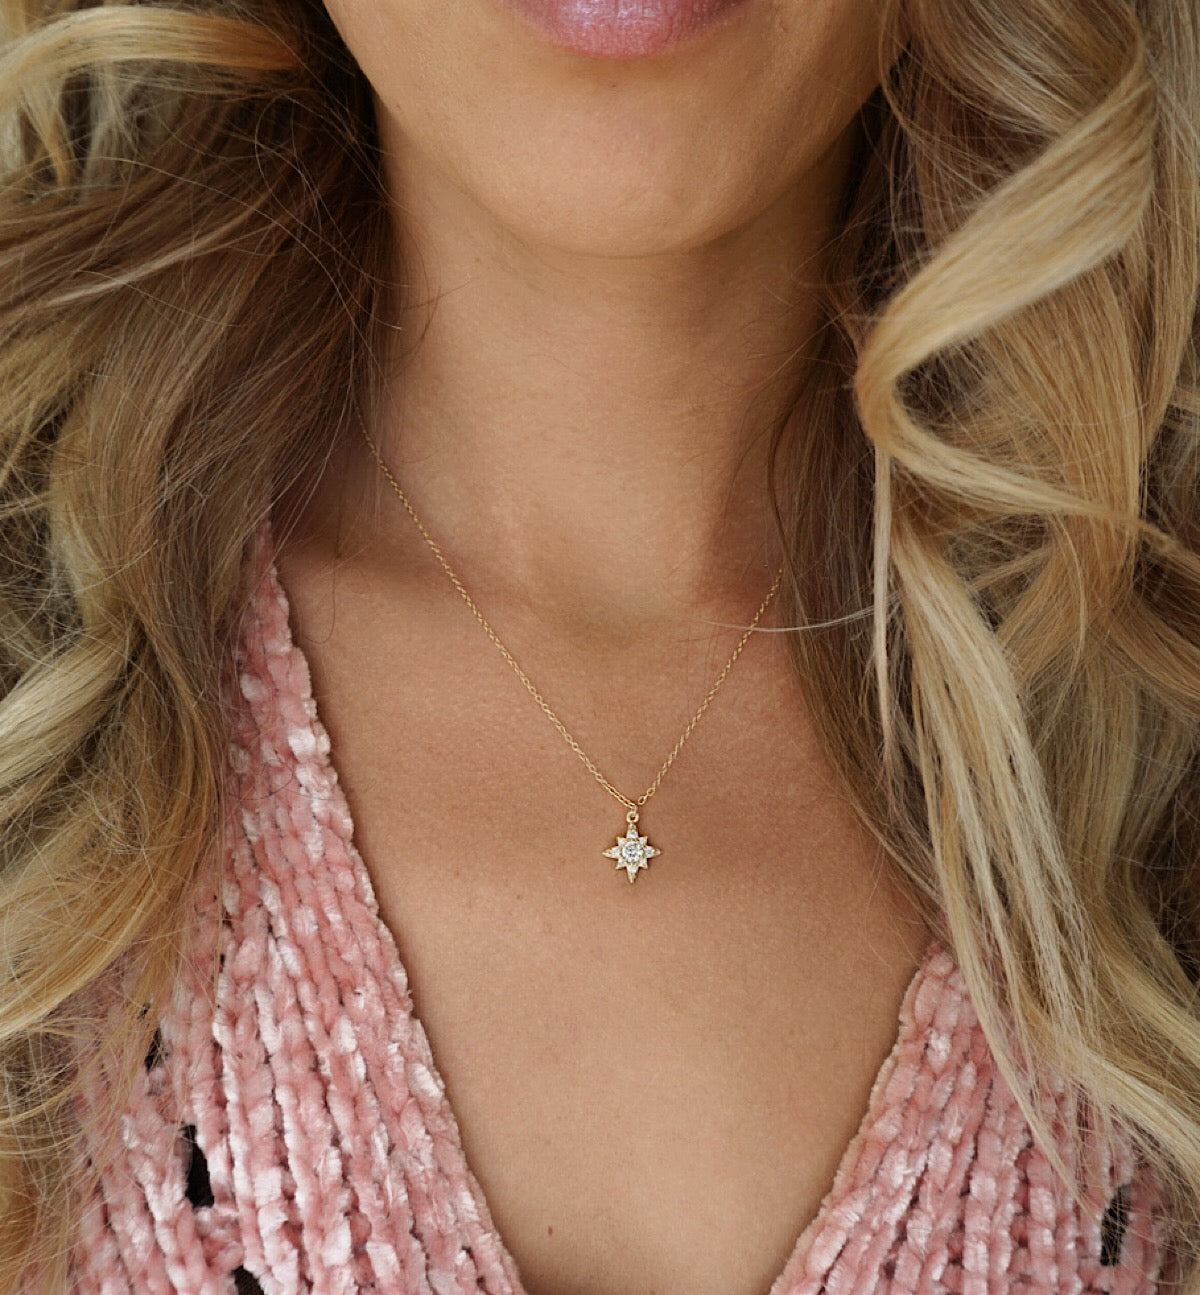 Celeste Starburst Pendant, Necklaces - AMY O. Jewelry